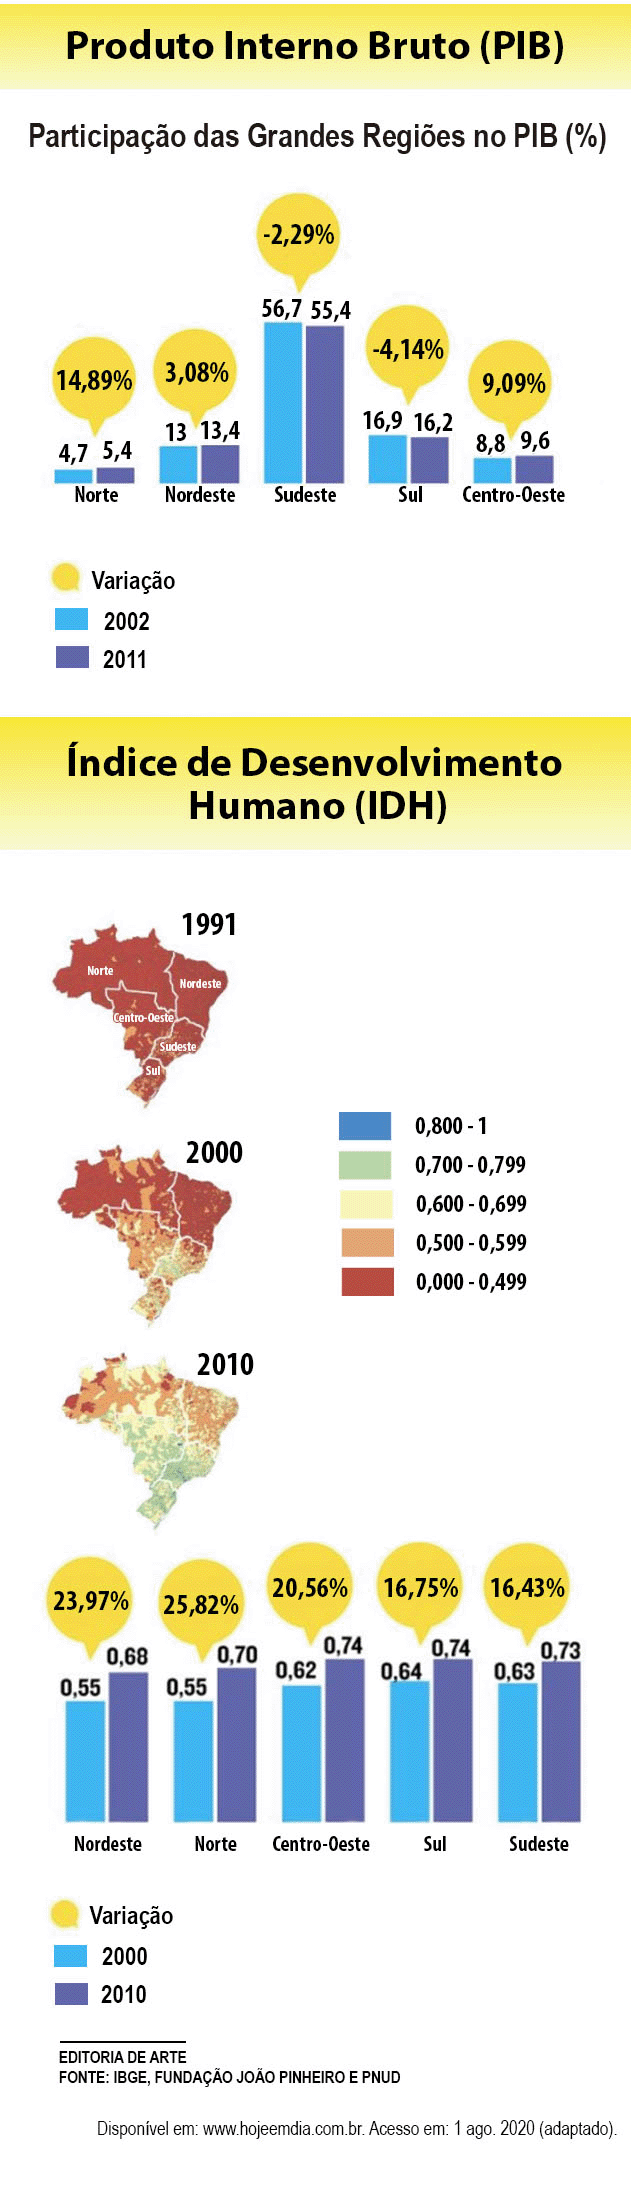 Produto Interno Bruto (PIB) e Índice de Desenvolvimento Humano (IDH)